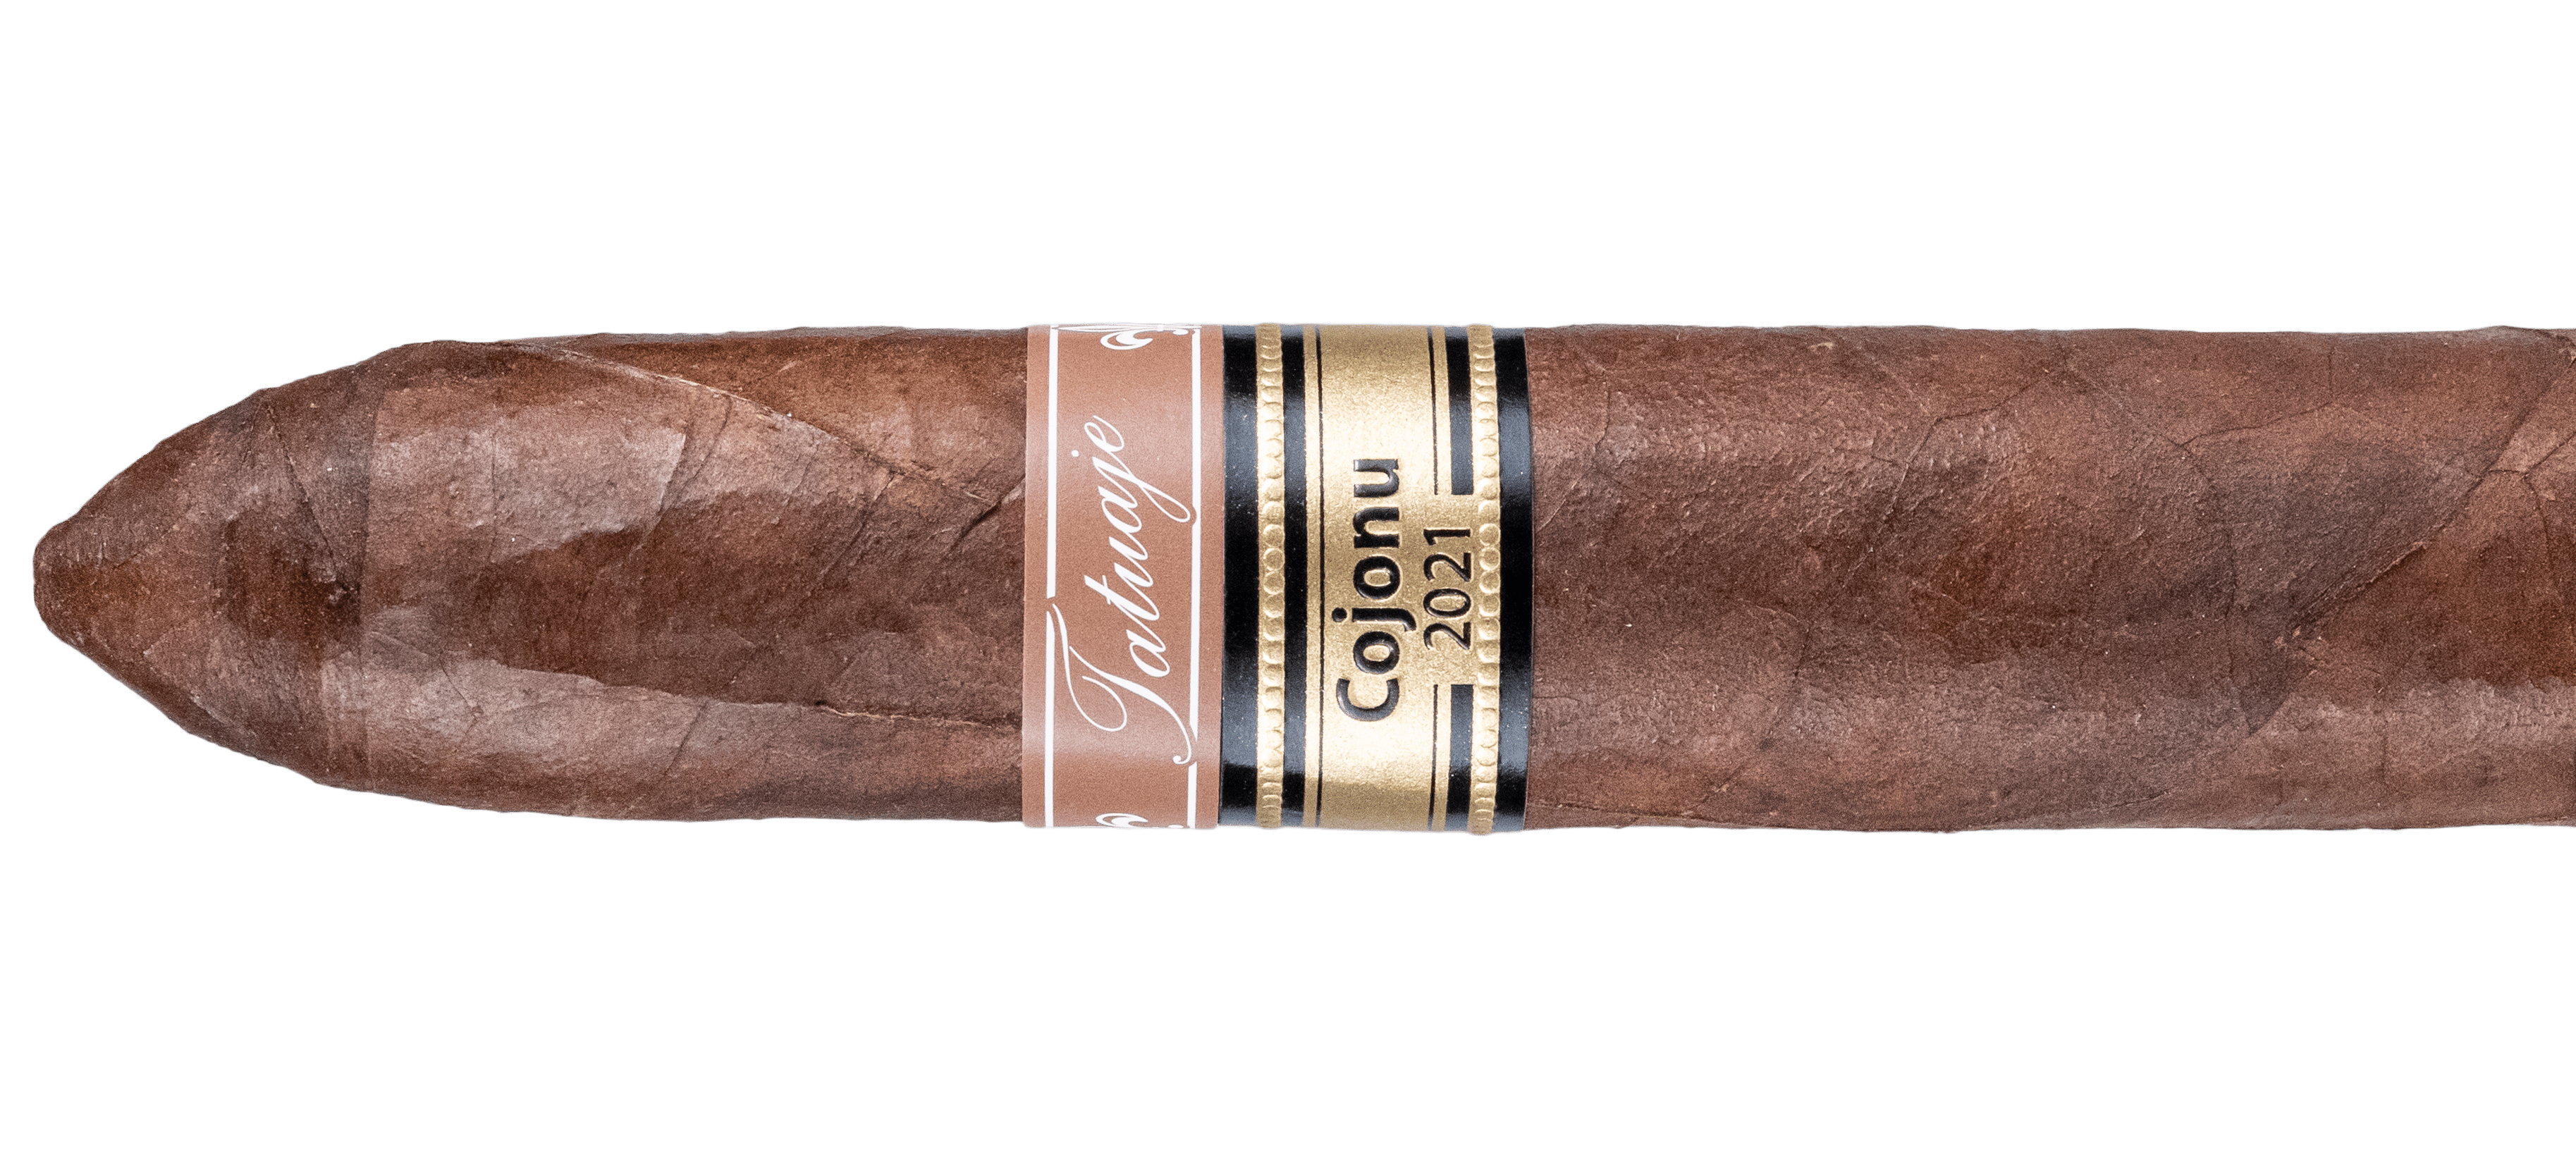 Tatuaje Cojonu 2021 - Blind Cigar Review